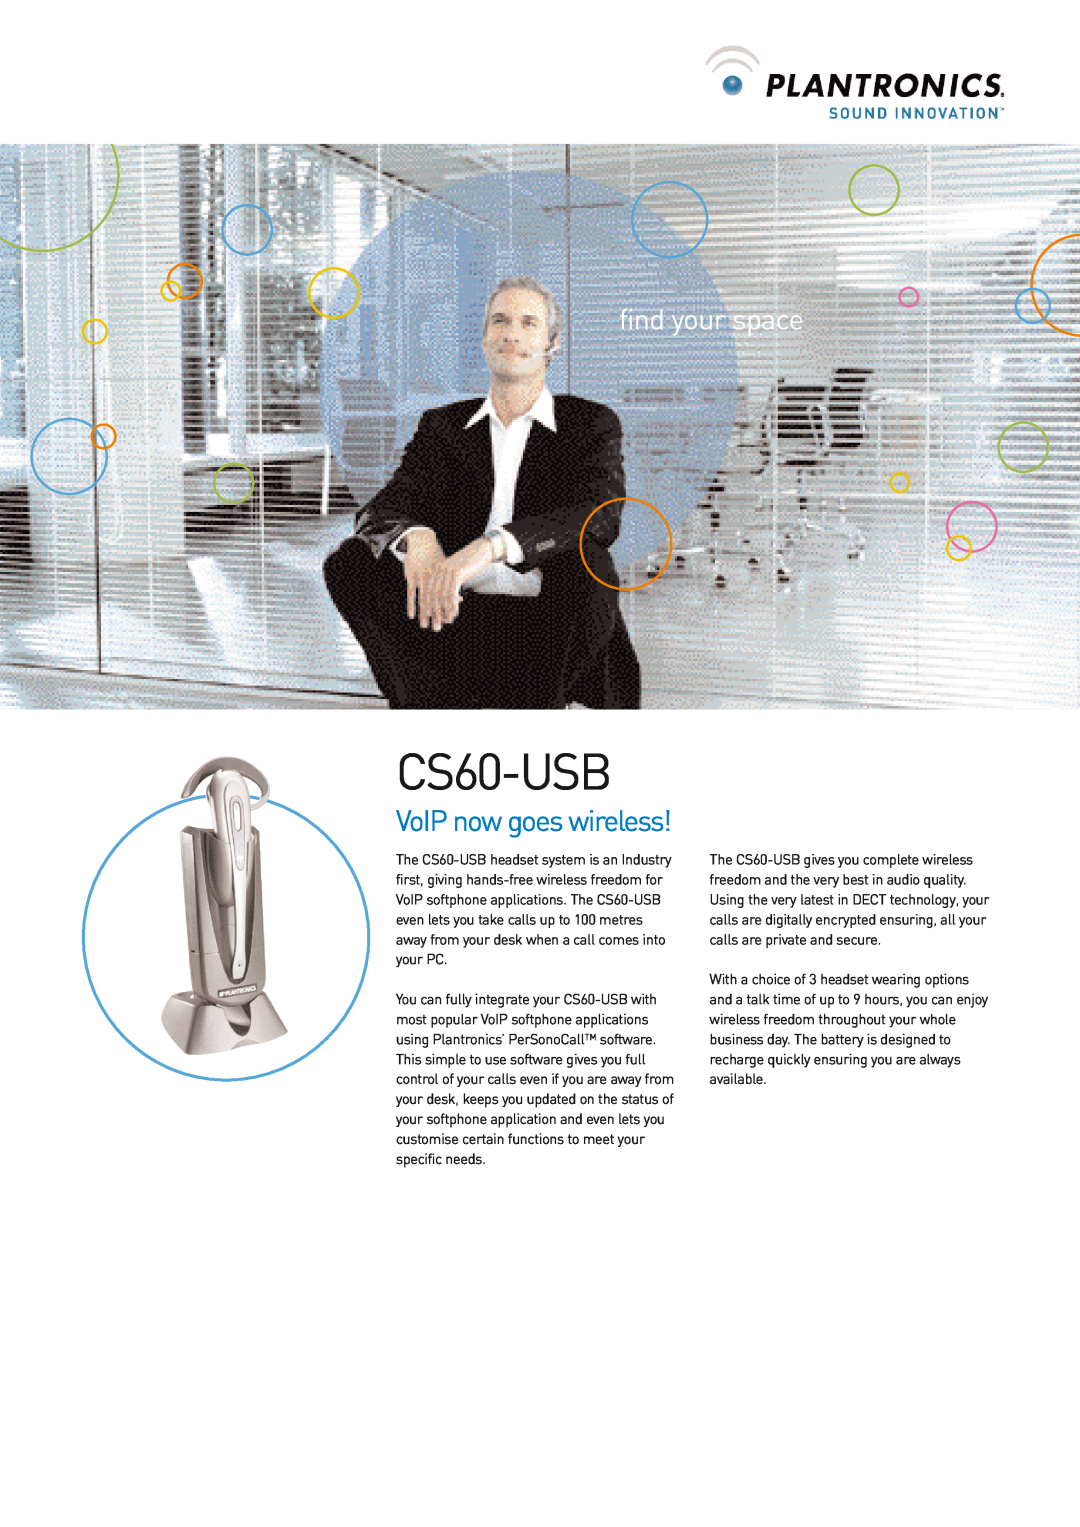 Plantronics manual CS50-USB& CS60-USBDECT WIRELESS HEADSET SYSTEM, User Guide 